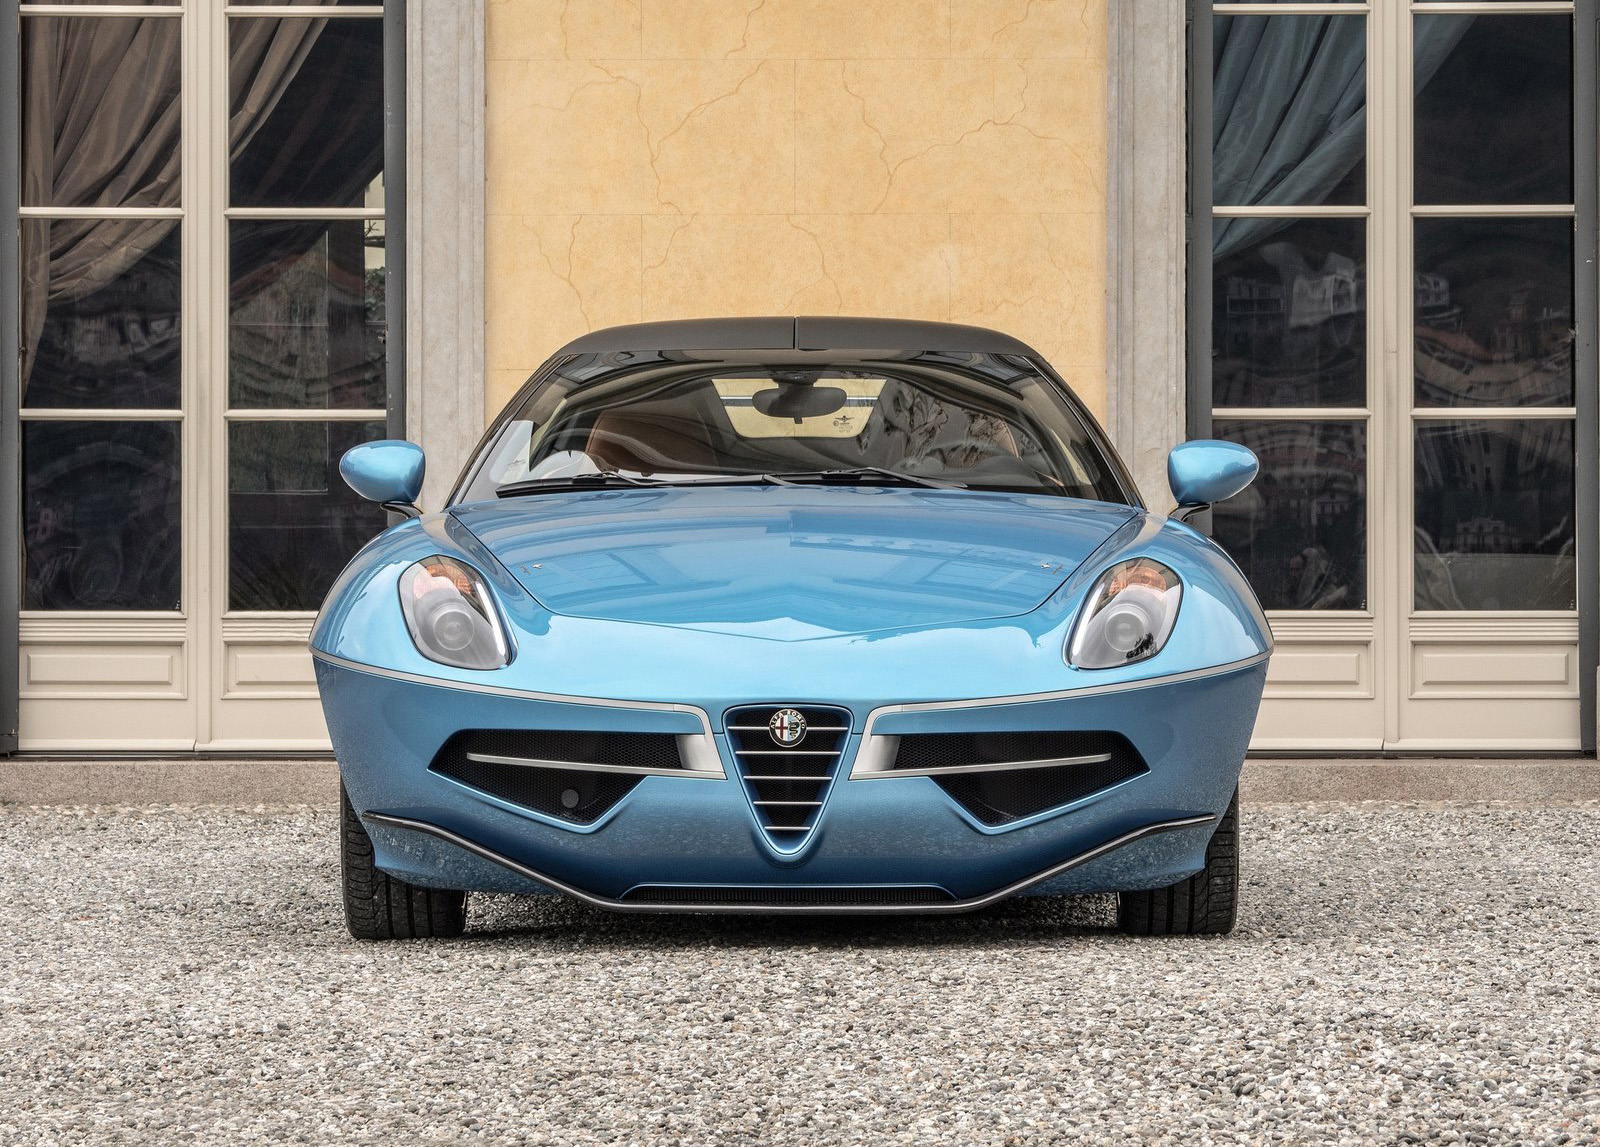 16 Alfa Romeo Disco Volante Spyder Touring News And Information